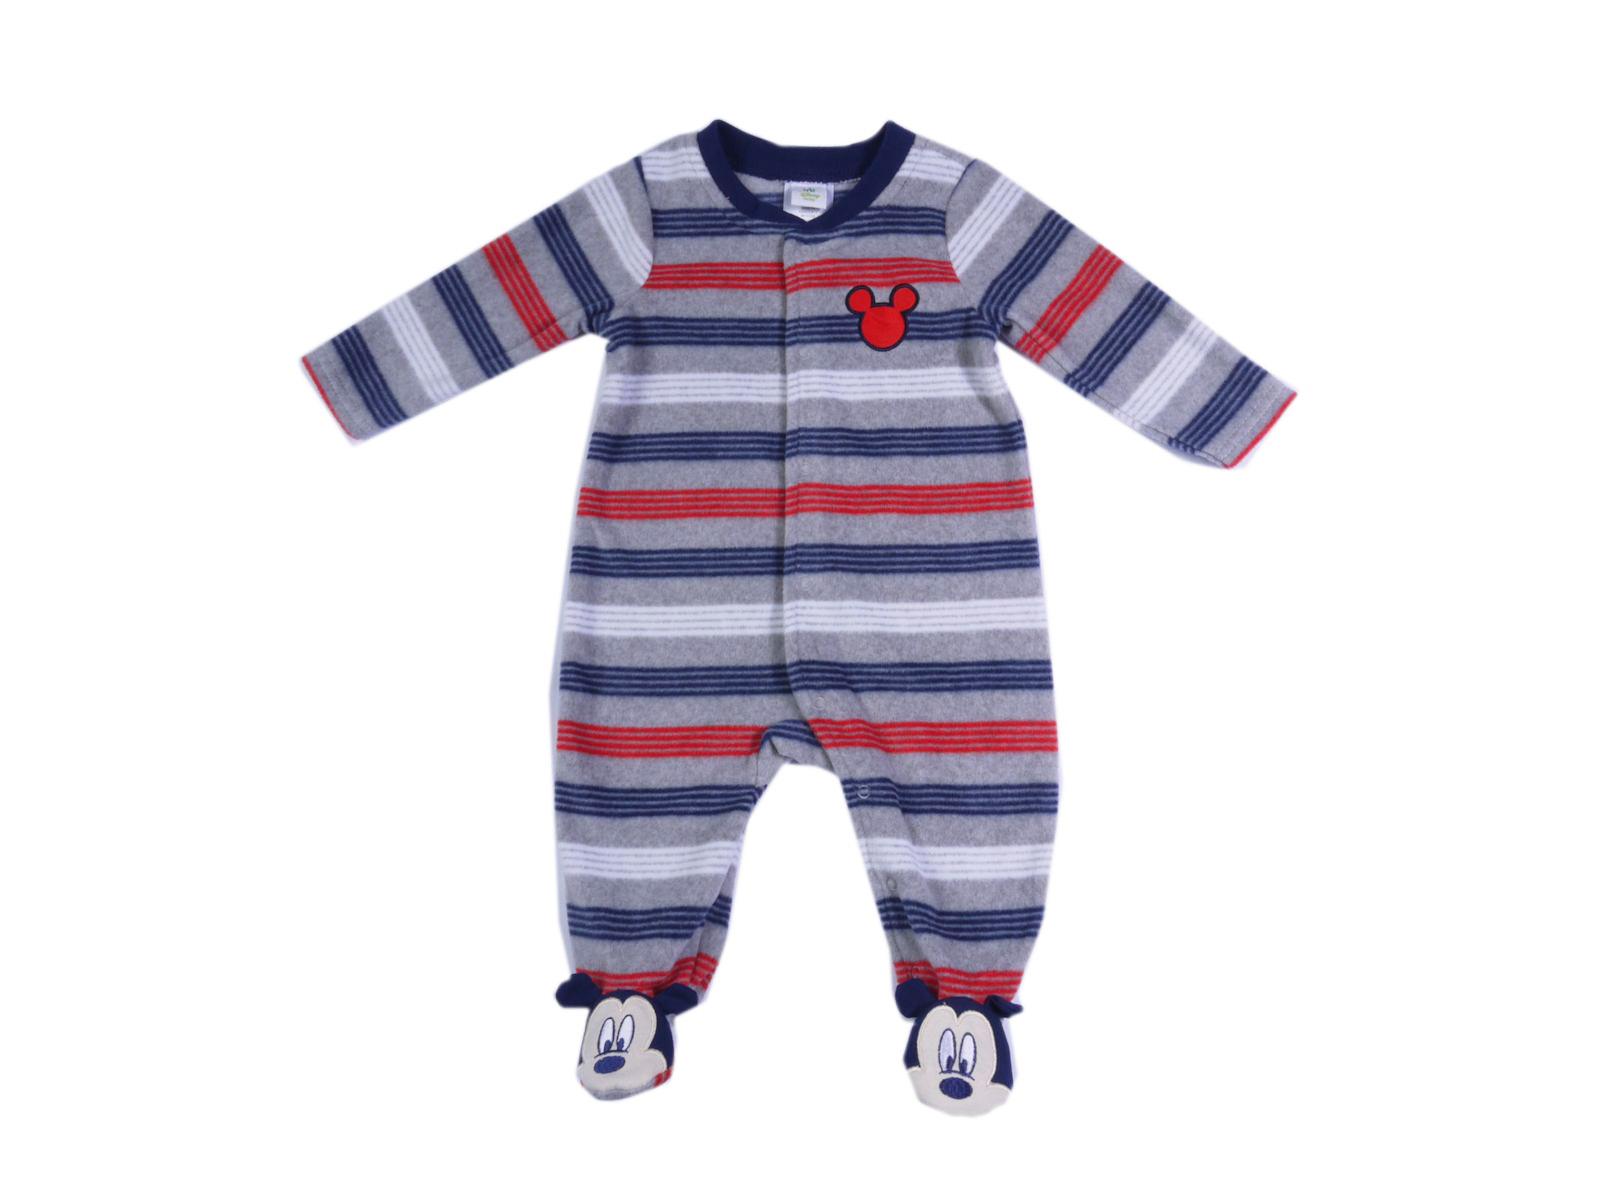 Disney Newborn & Infant Boy's Footed Sleeper Pajamas - Striped